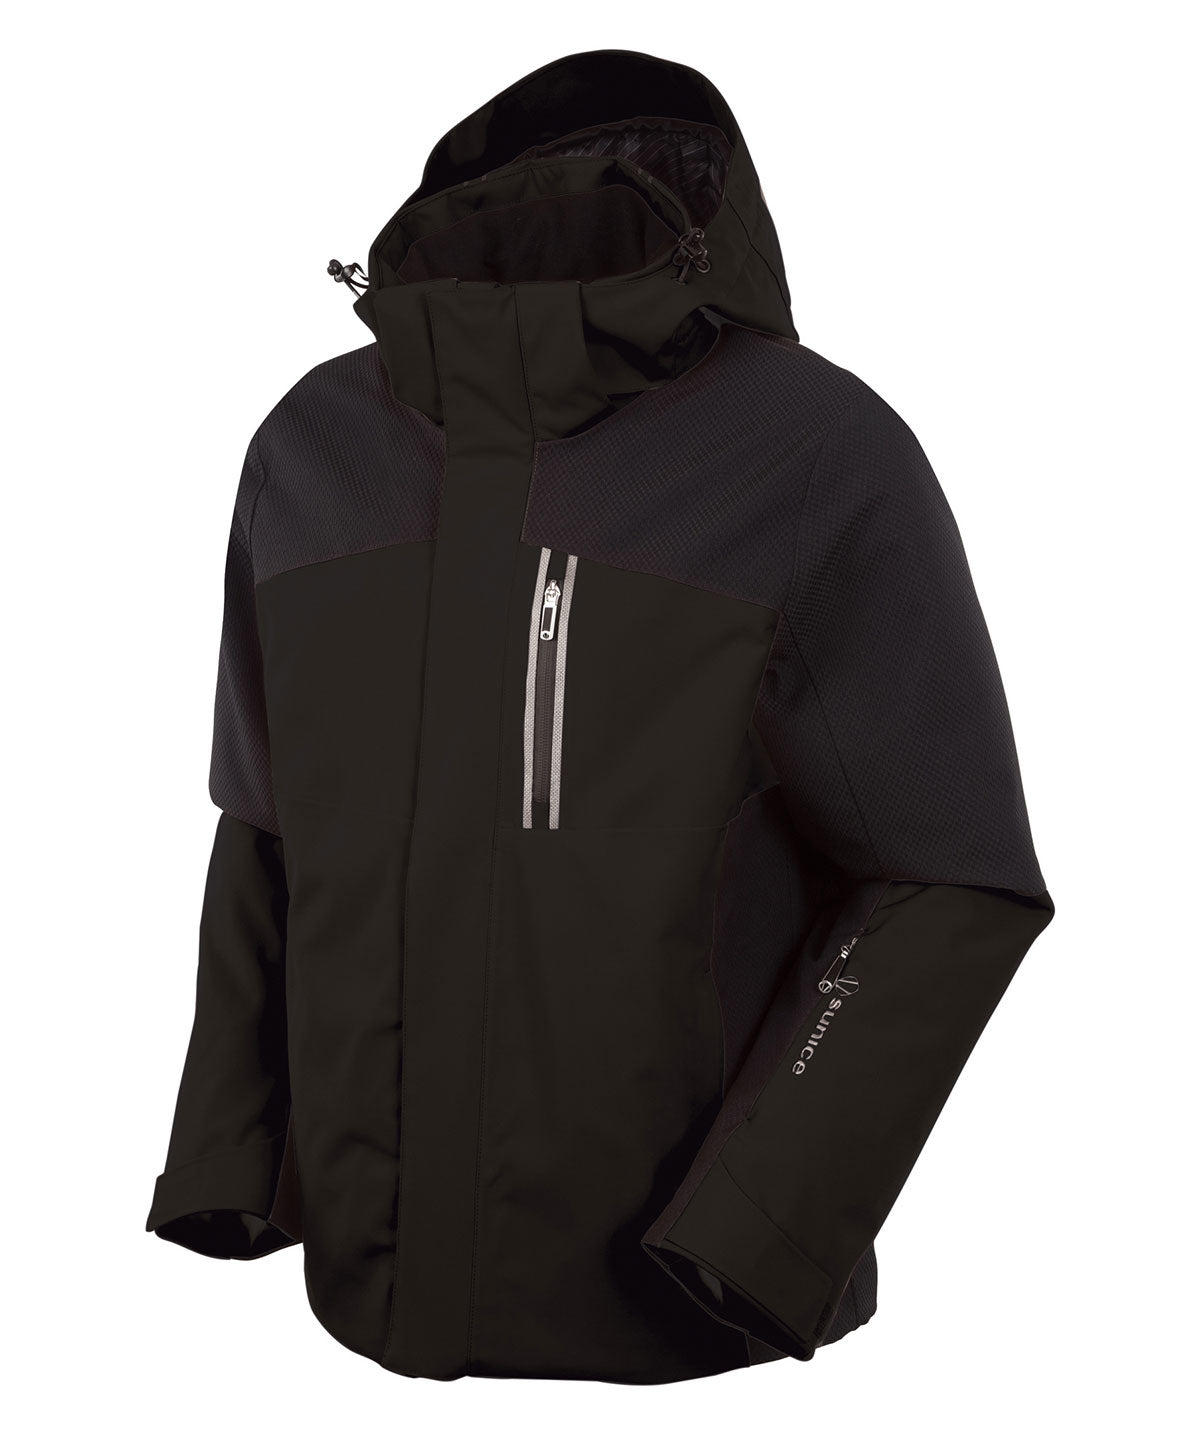 Men's Steven Waterproof Stretch Jacket with Removable Hood